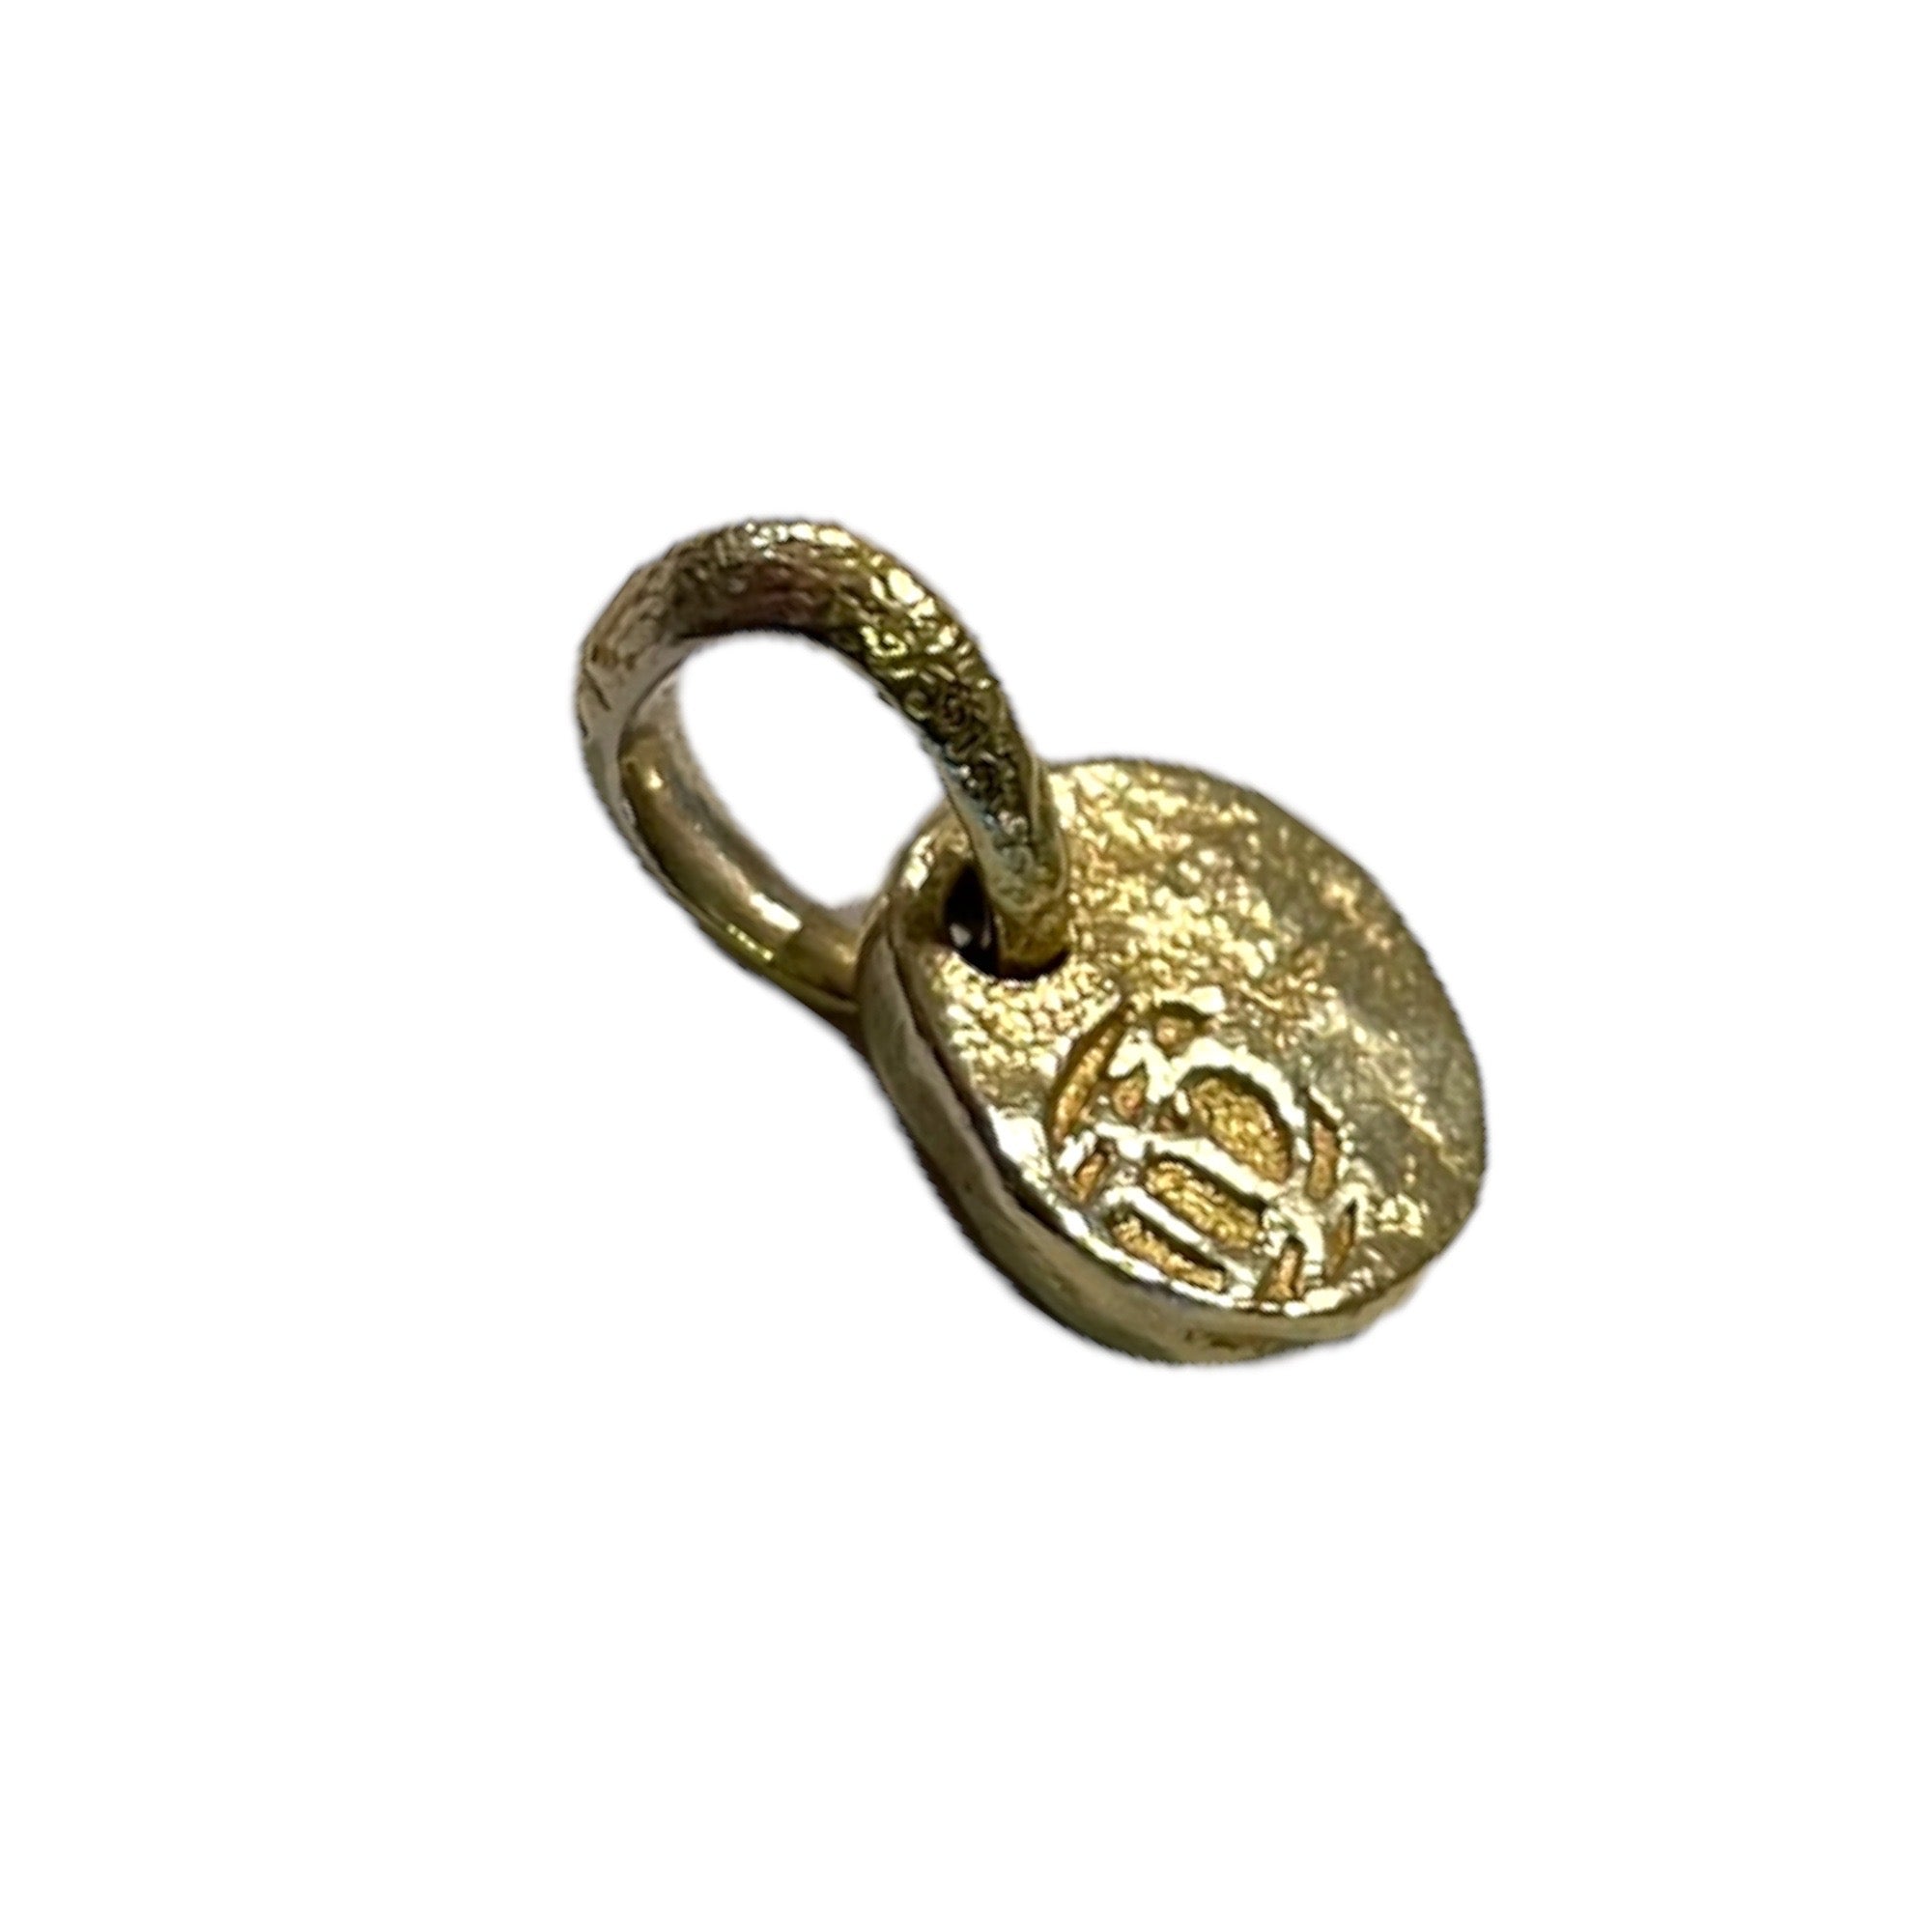 DAVID YURMAN Shipwreck Coin Amulet 22K Yellow Gold (17mm)